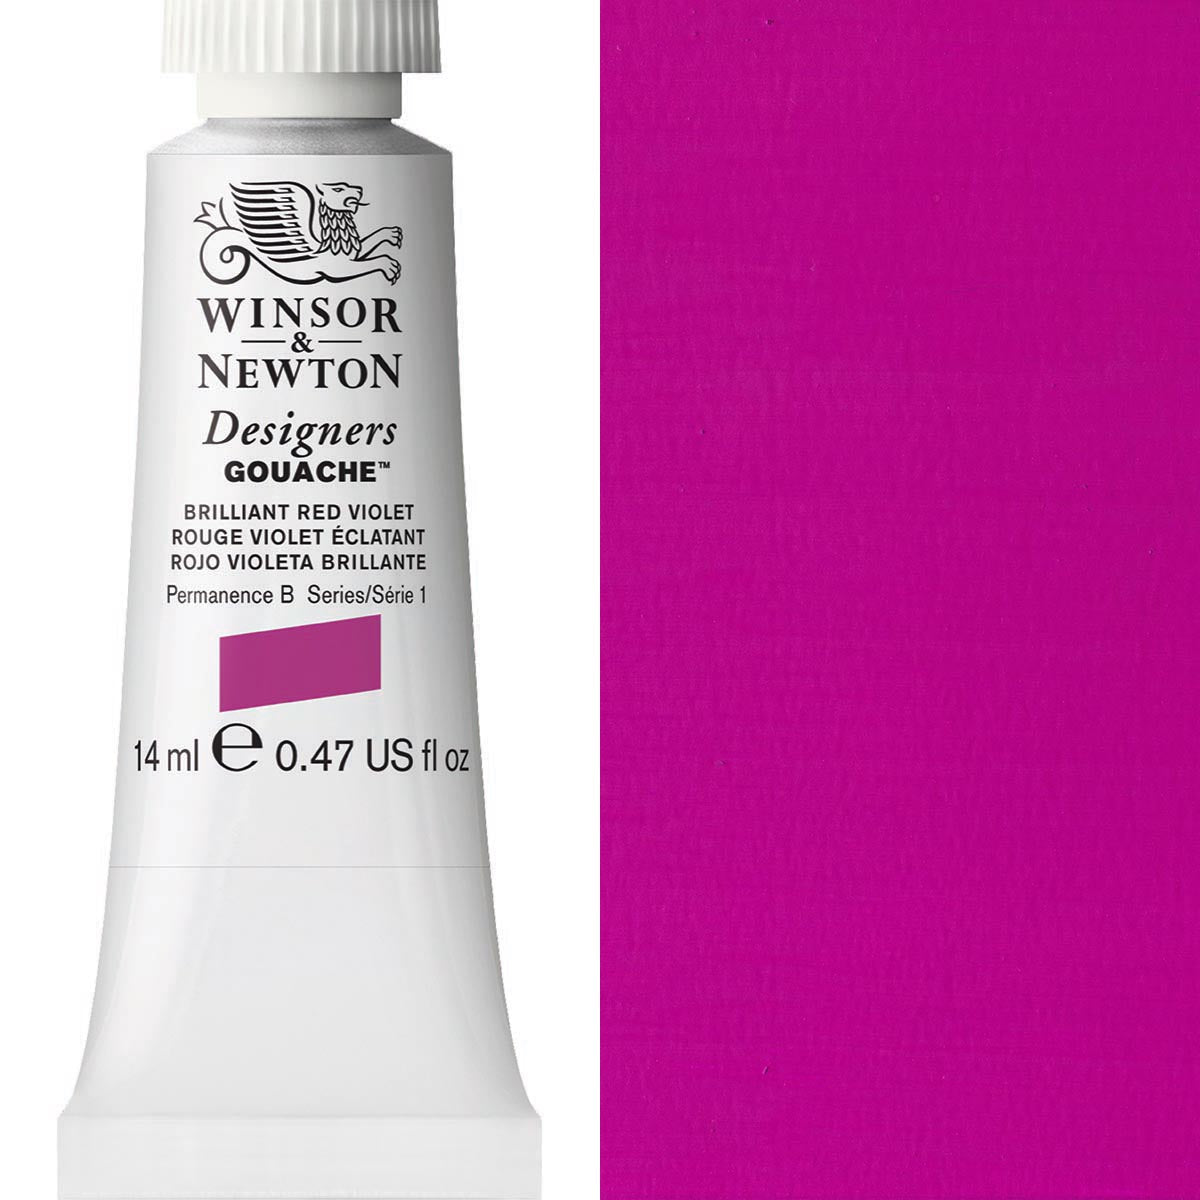 Winsor and Newton - Designers Gouache - 14ml - Brilliant Red Violet